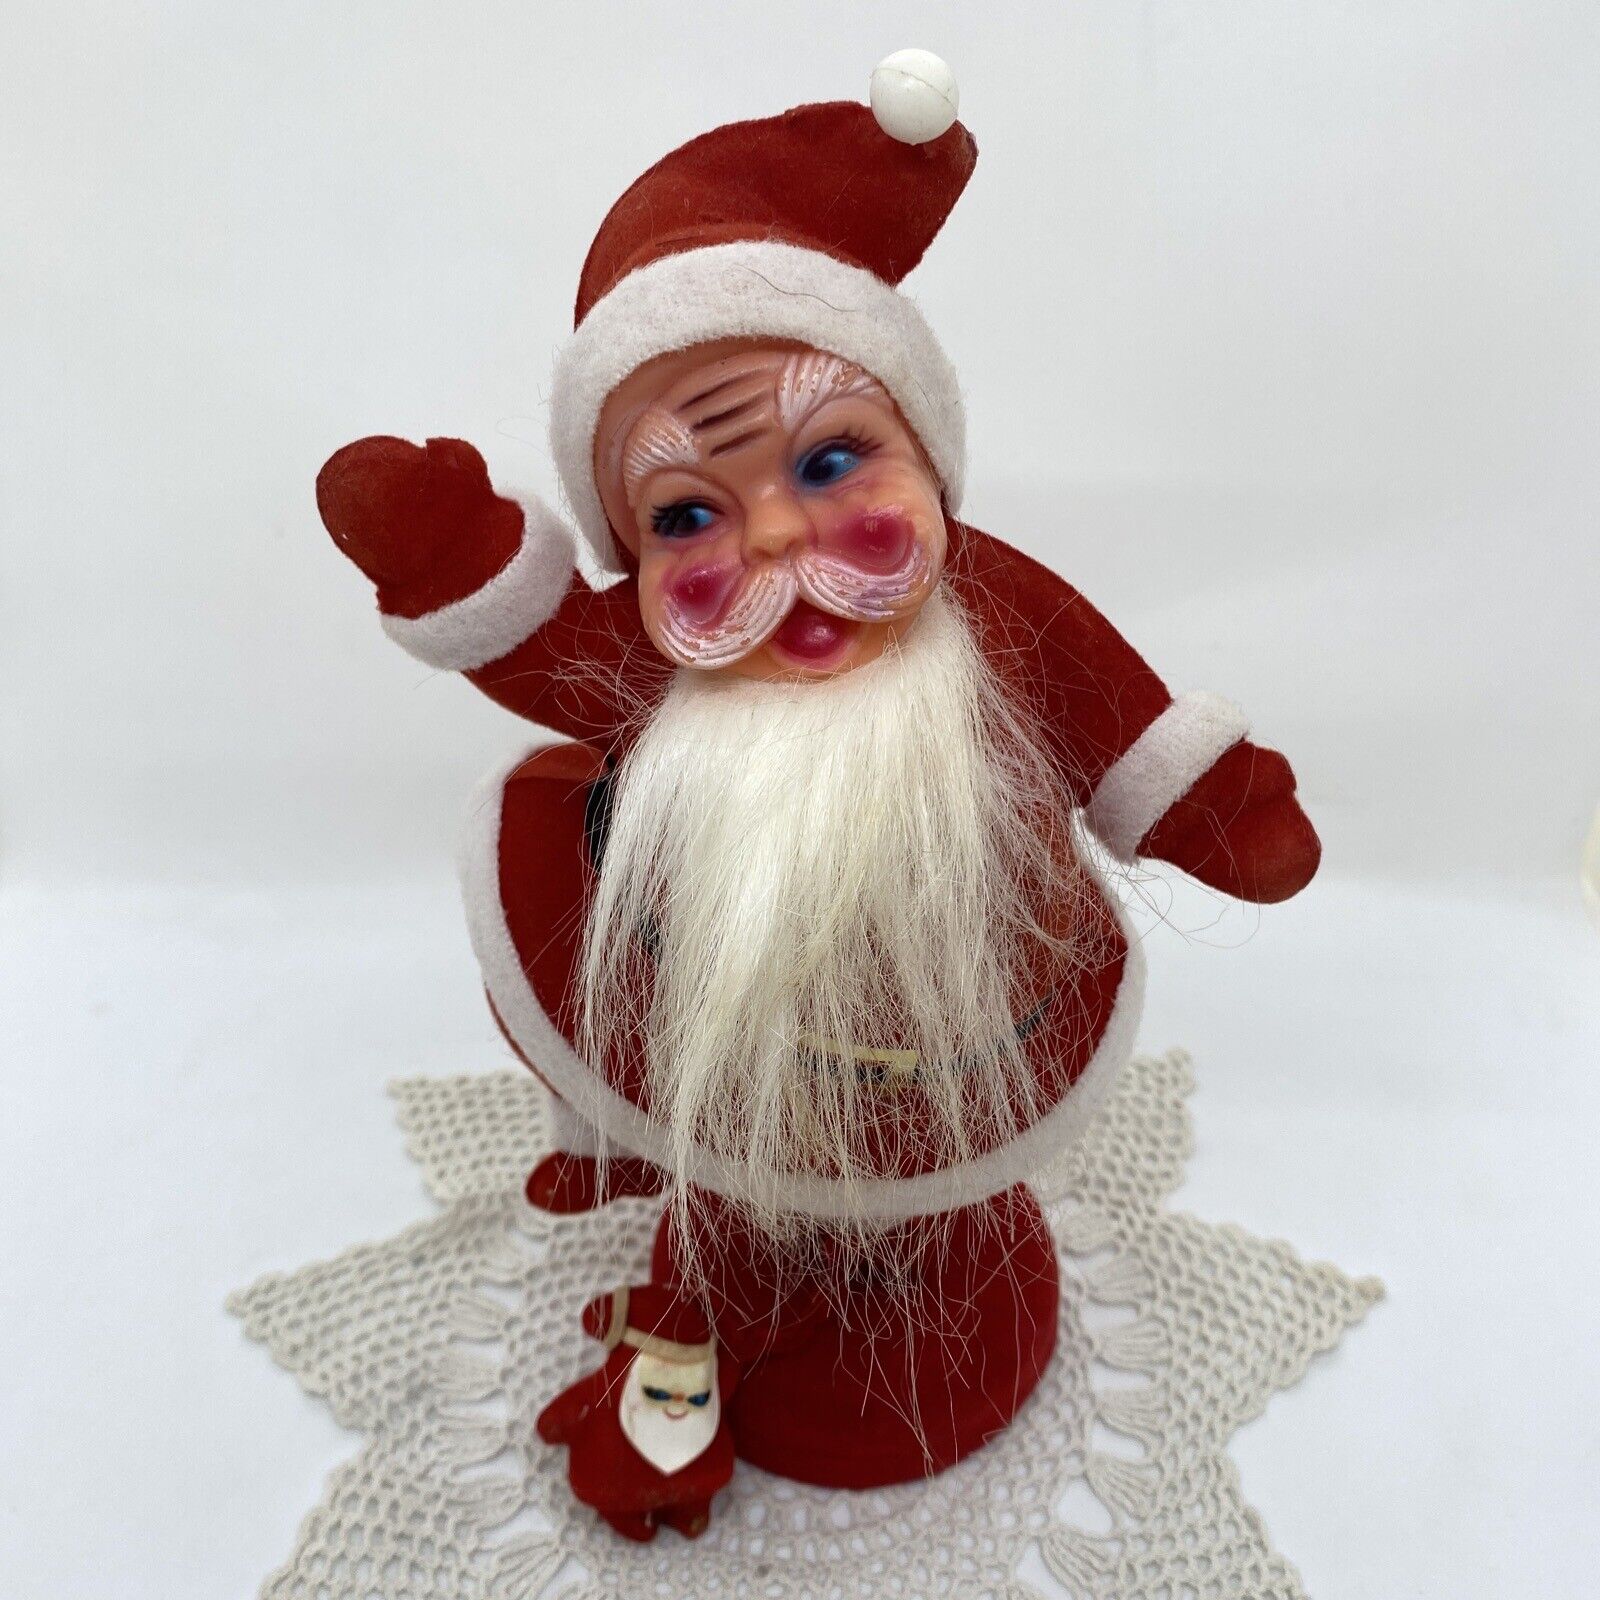 Santa Claus Flocked Felt Vintage Christmas Dancing & Waving Figure 9” Tall